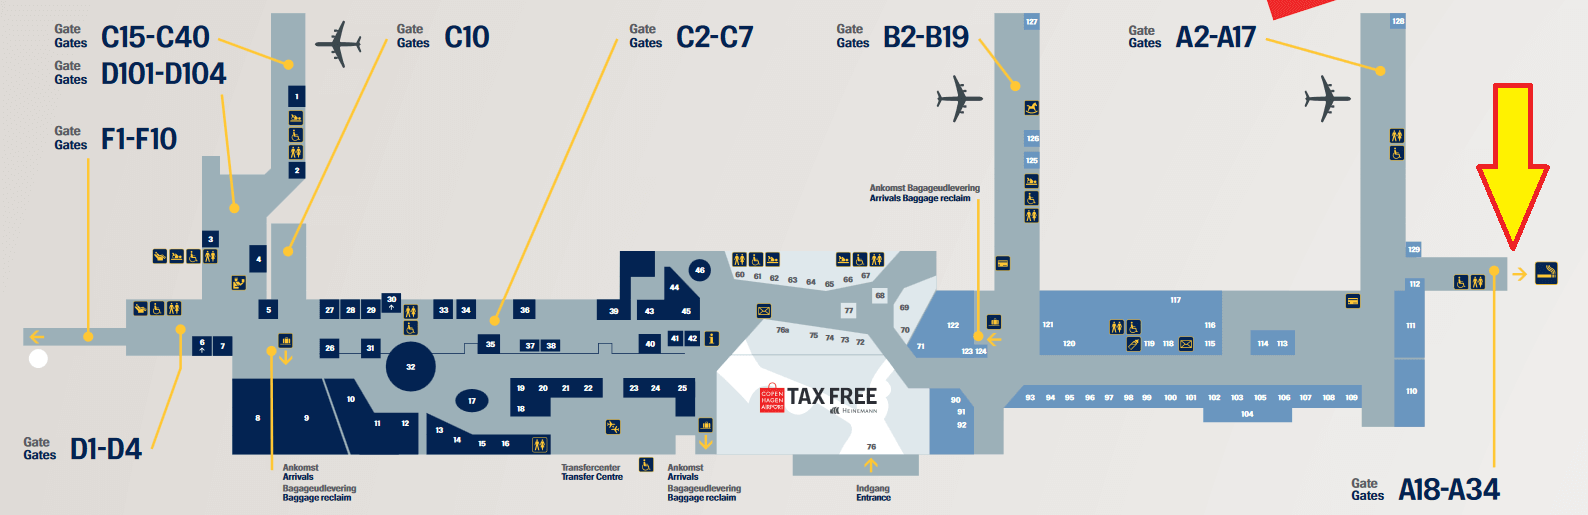 Copenhagen Airport Terminal Map